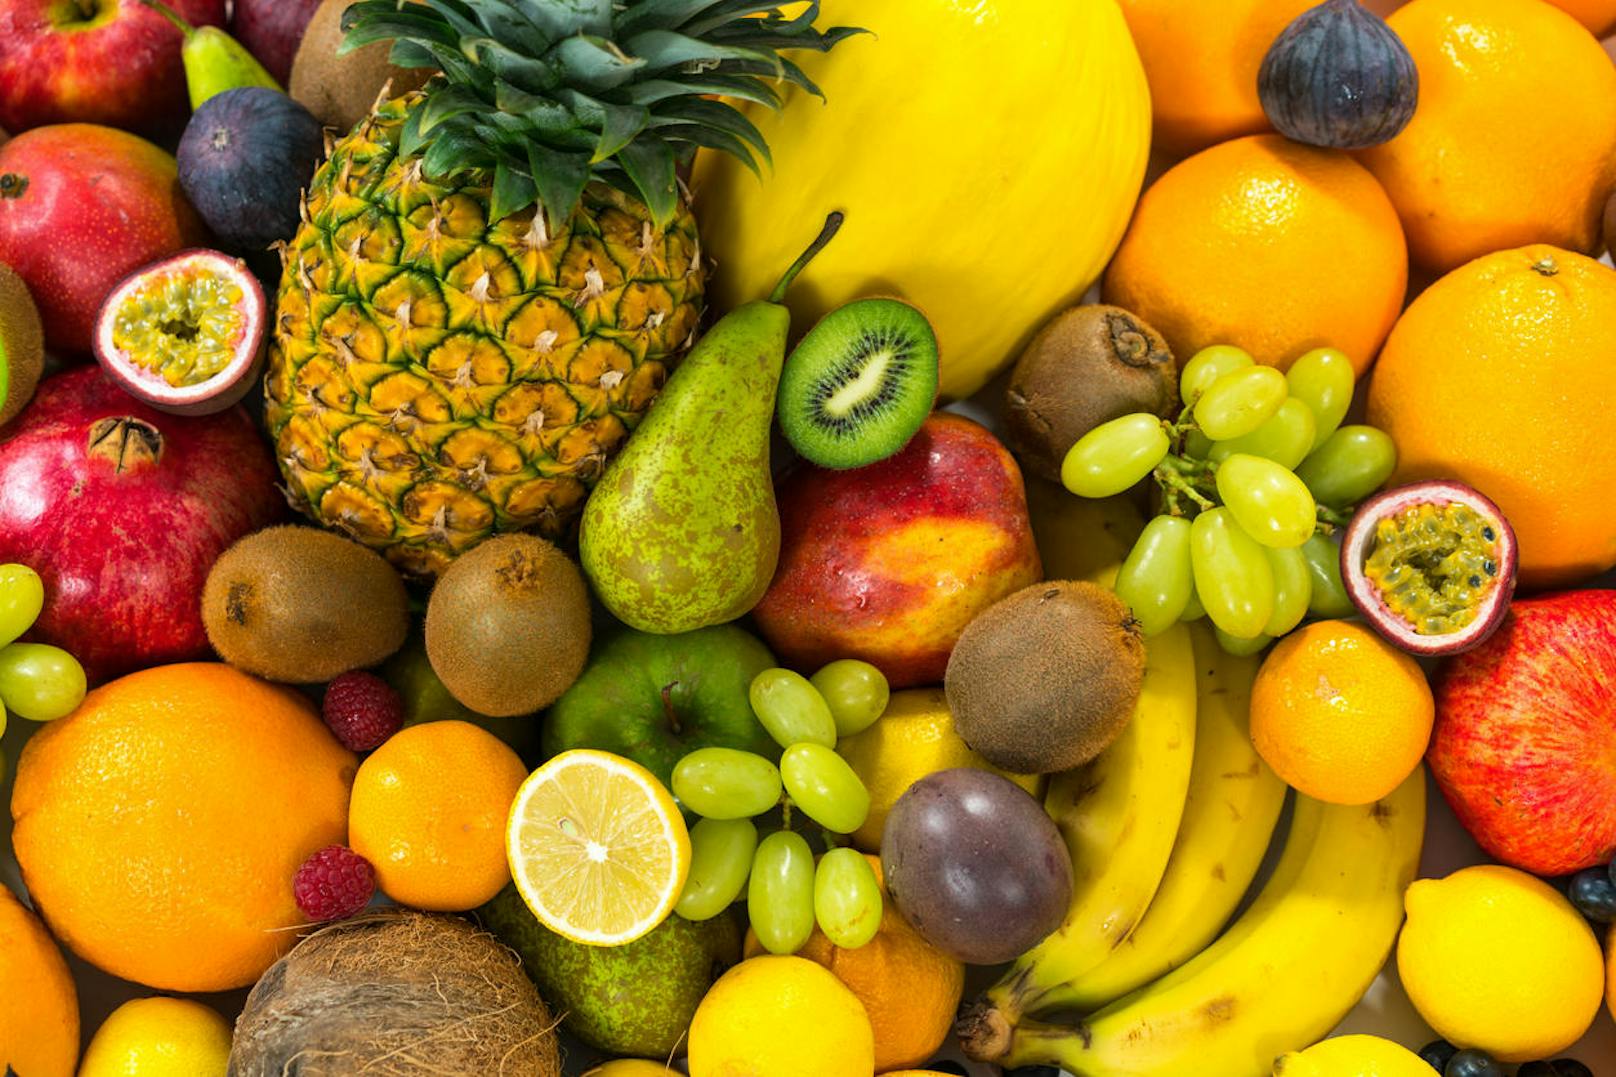 ... Obst (Überreife Früchte, Erdbeeren, Himbeeren, Orangen, Zitrusfrüchte, Banane, Ananas, Kiwi, Birnen, Obstkonserven)..